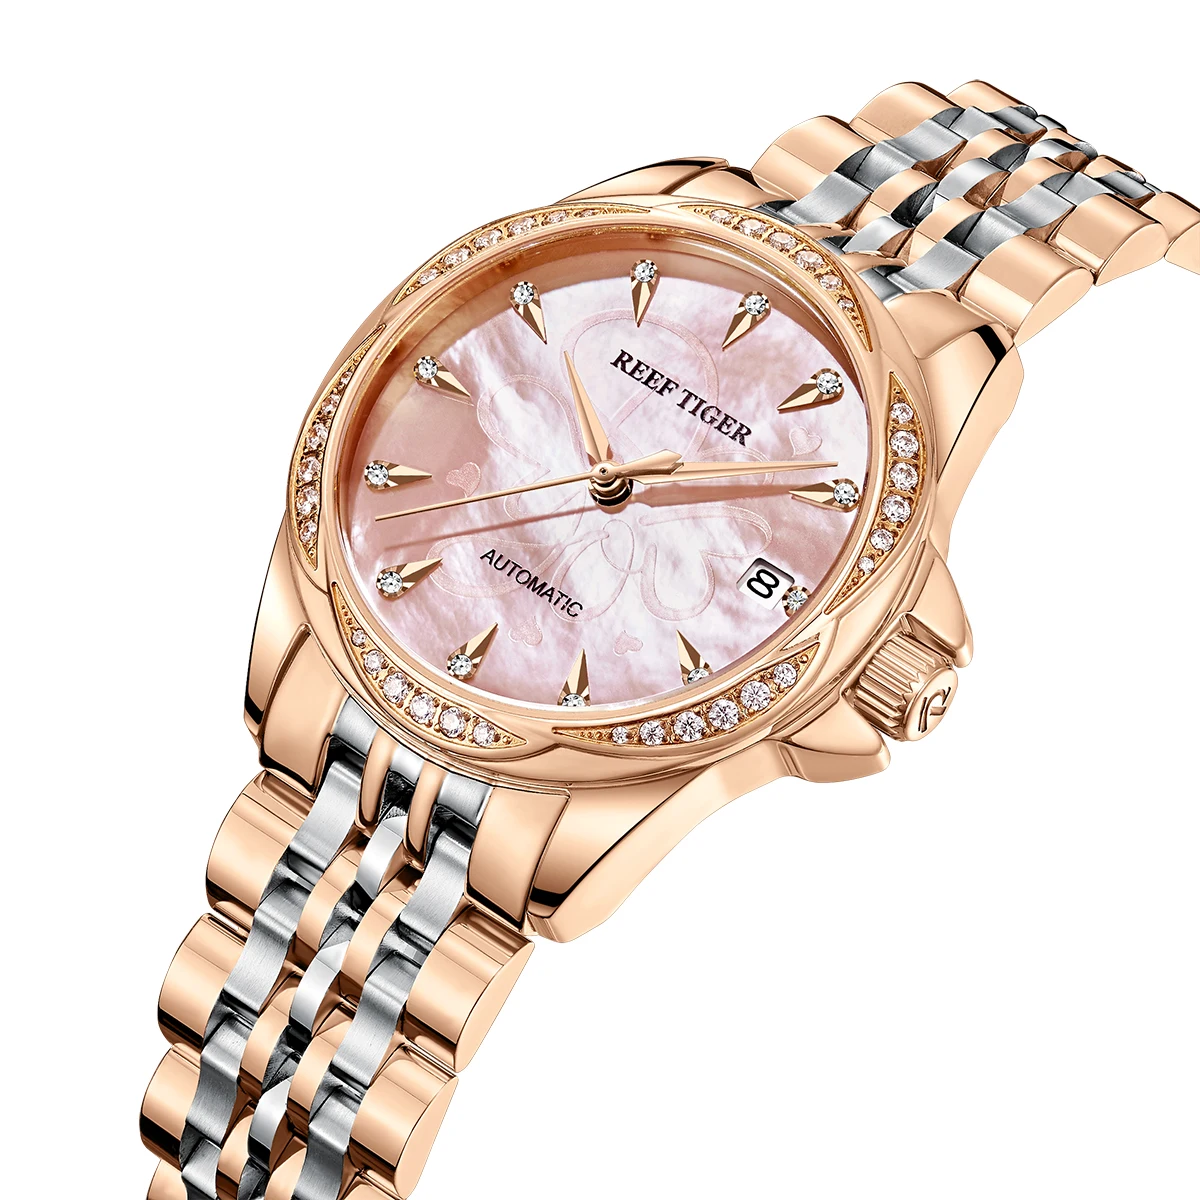 Reef Tiger/RT Sapphire Crystal Women Mechanical Watch Luxury Brand Rose Gold Women Automatic Watch Diamond Dress Watch RGA1583-2 enlarge